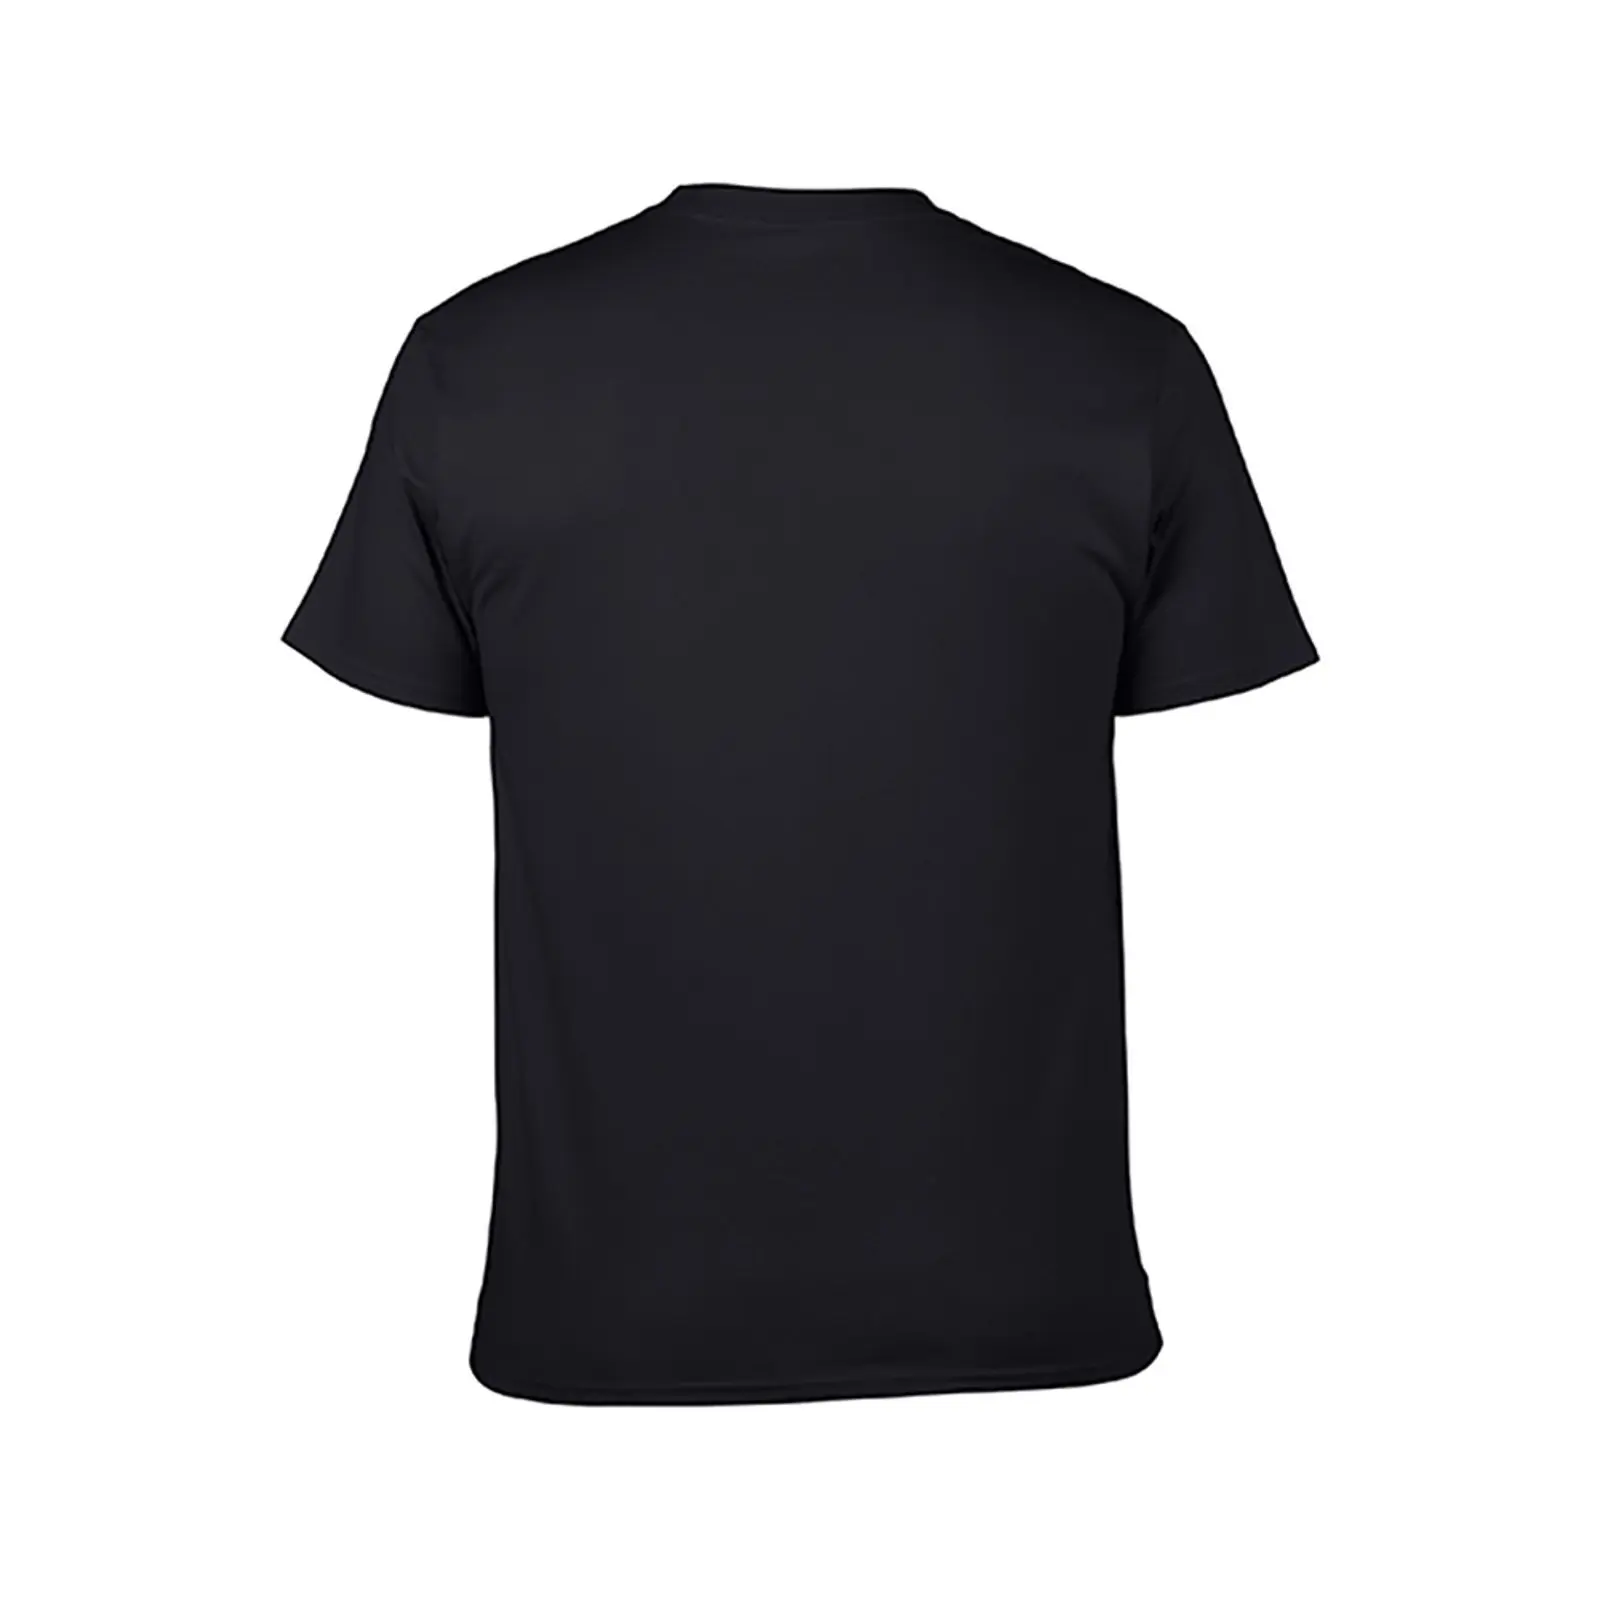 Vanjie Halloween T-Shirt preta, t-shirt preto t-shirts gráfico t-shirts mais o tamanho de t-shirts a roupa para homens . ' - ' . 2